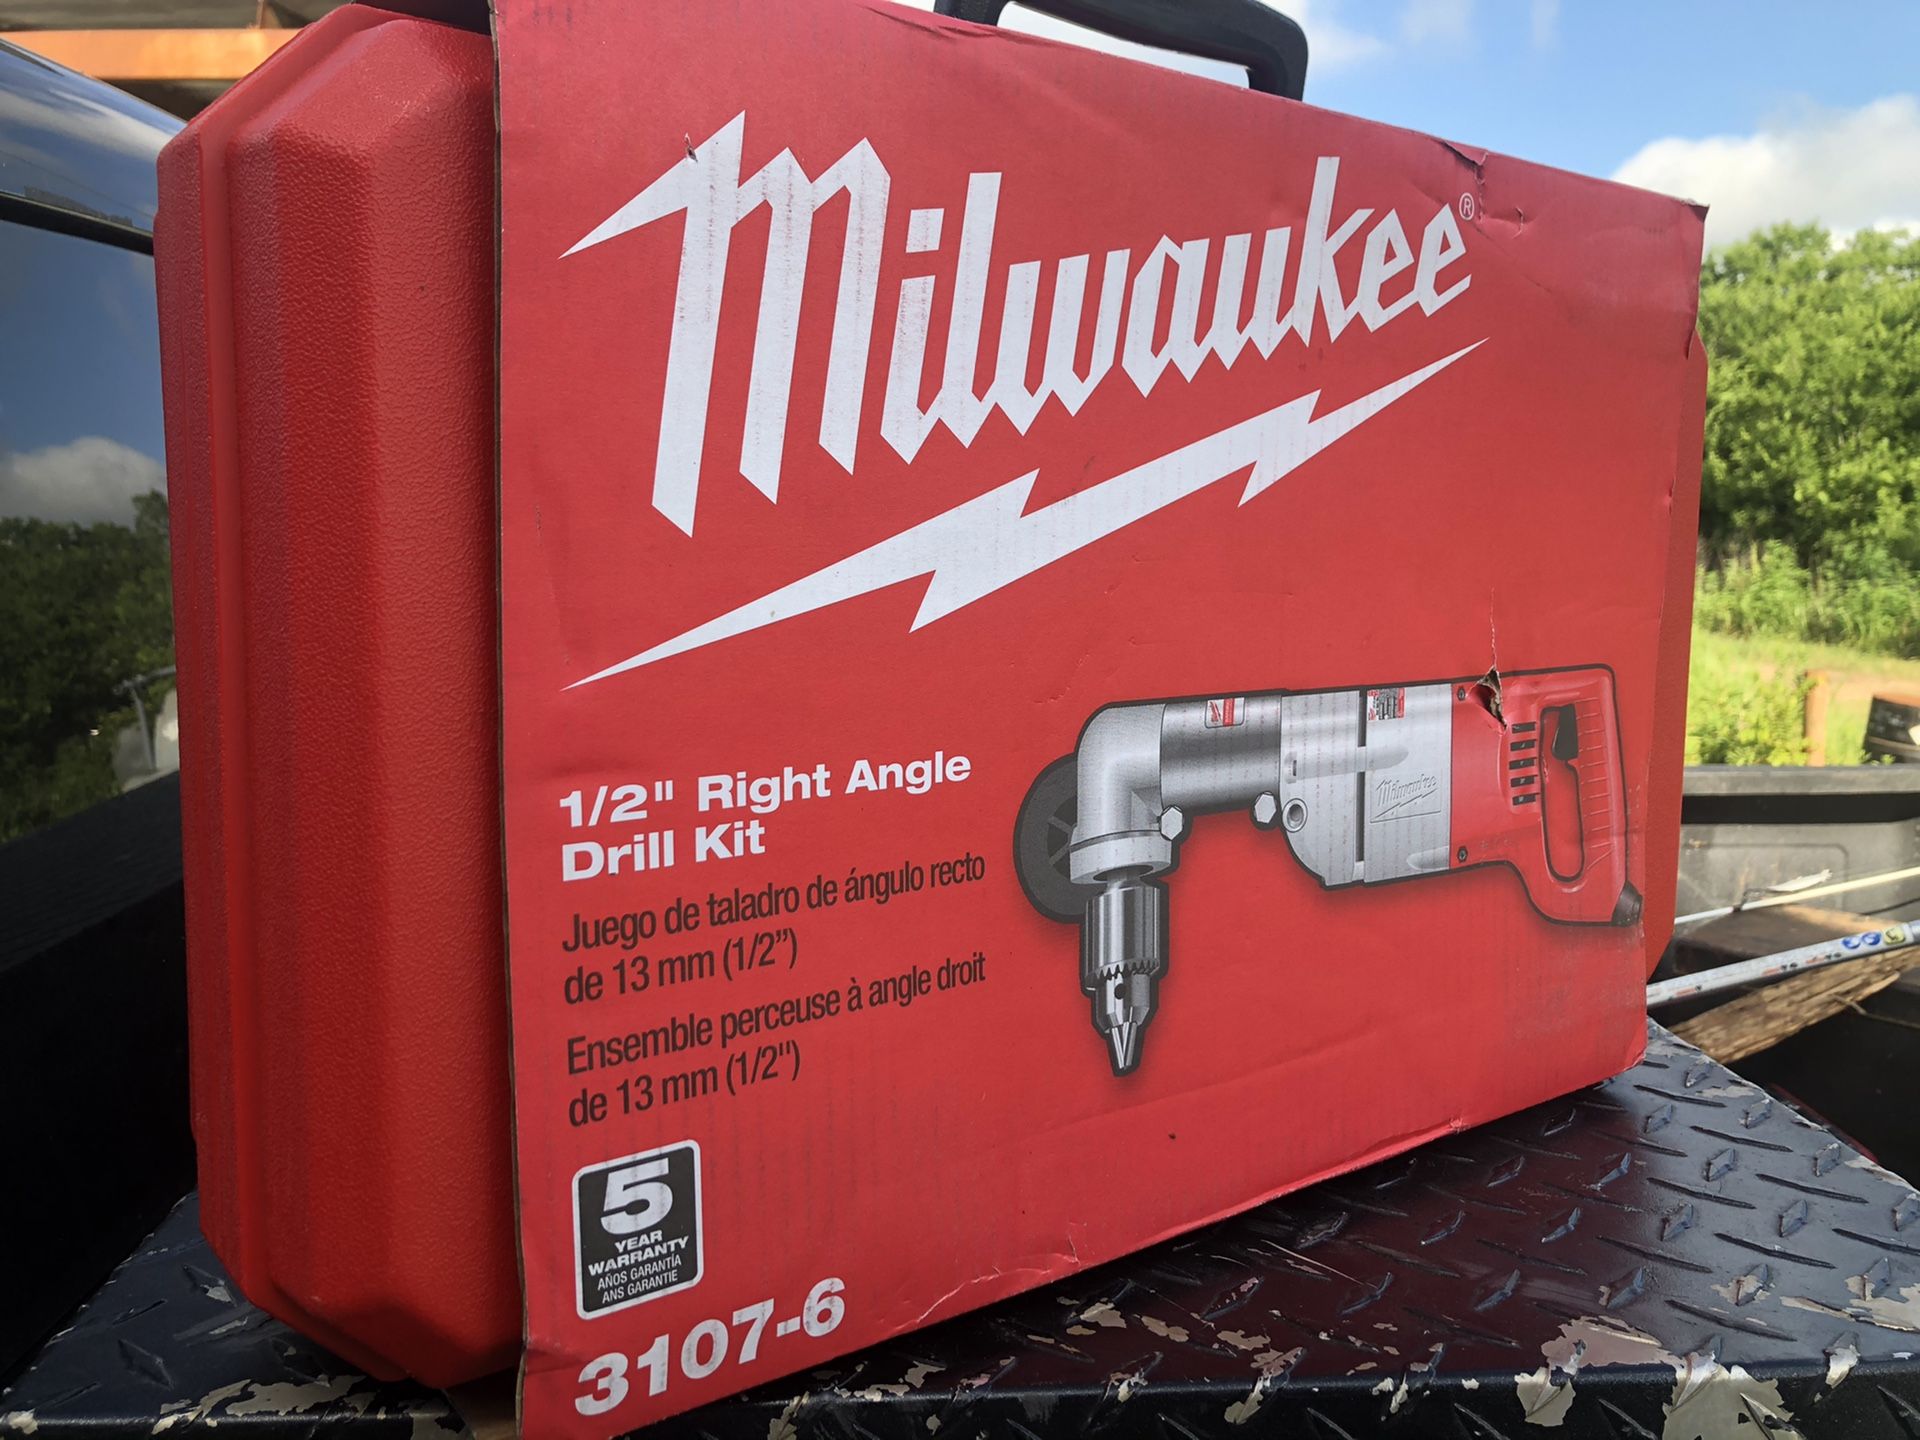 Milwaukee right angle drill kit